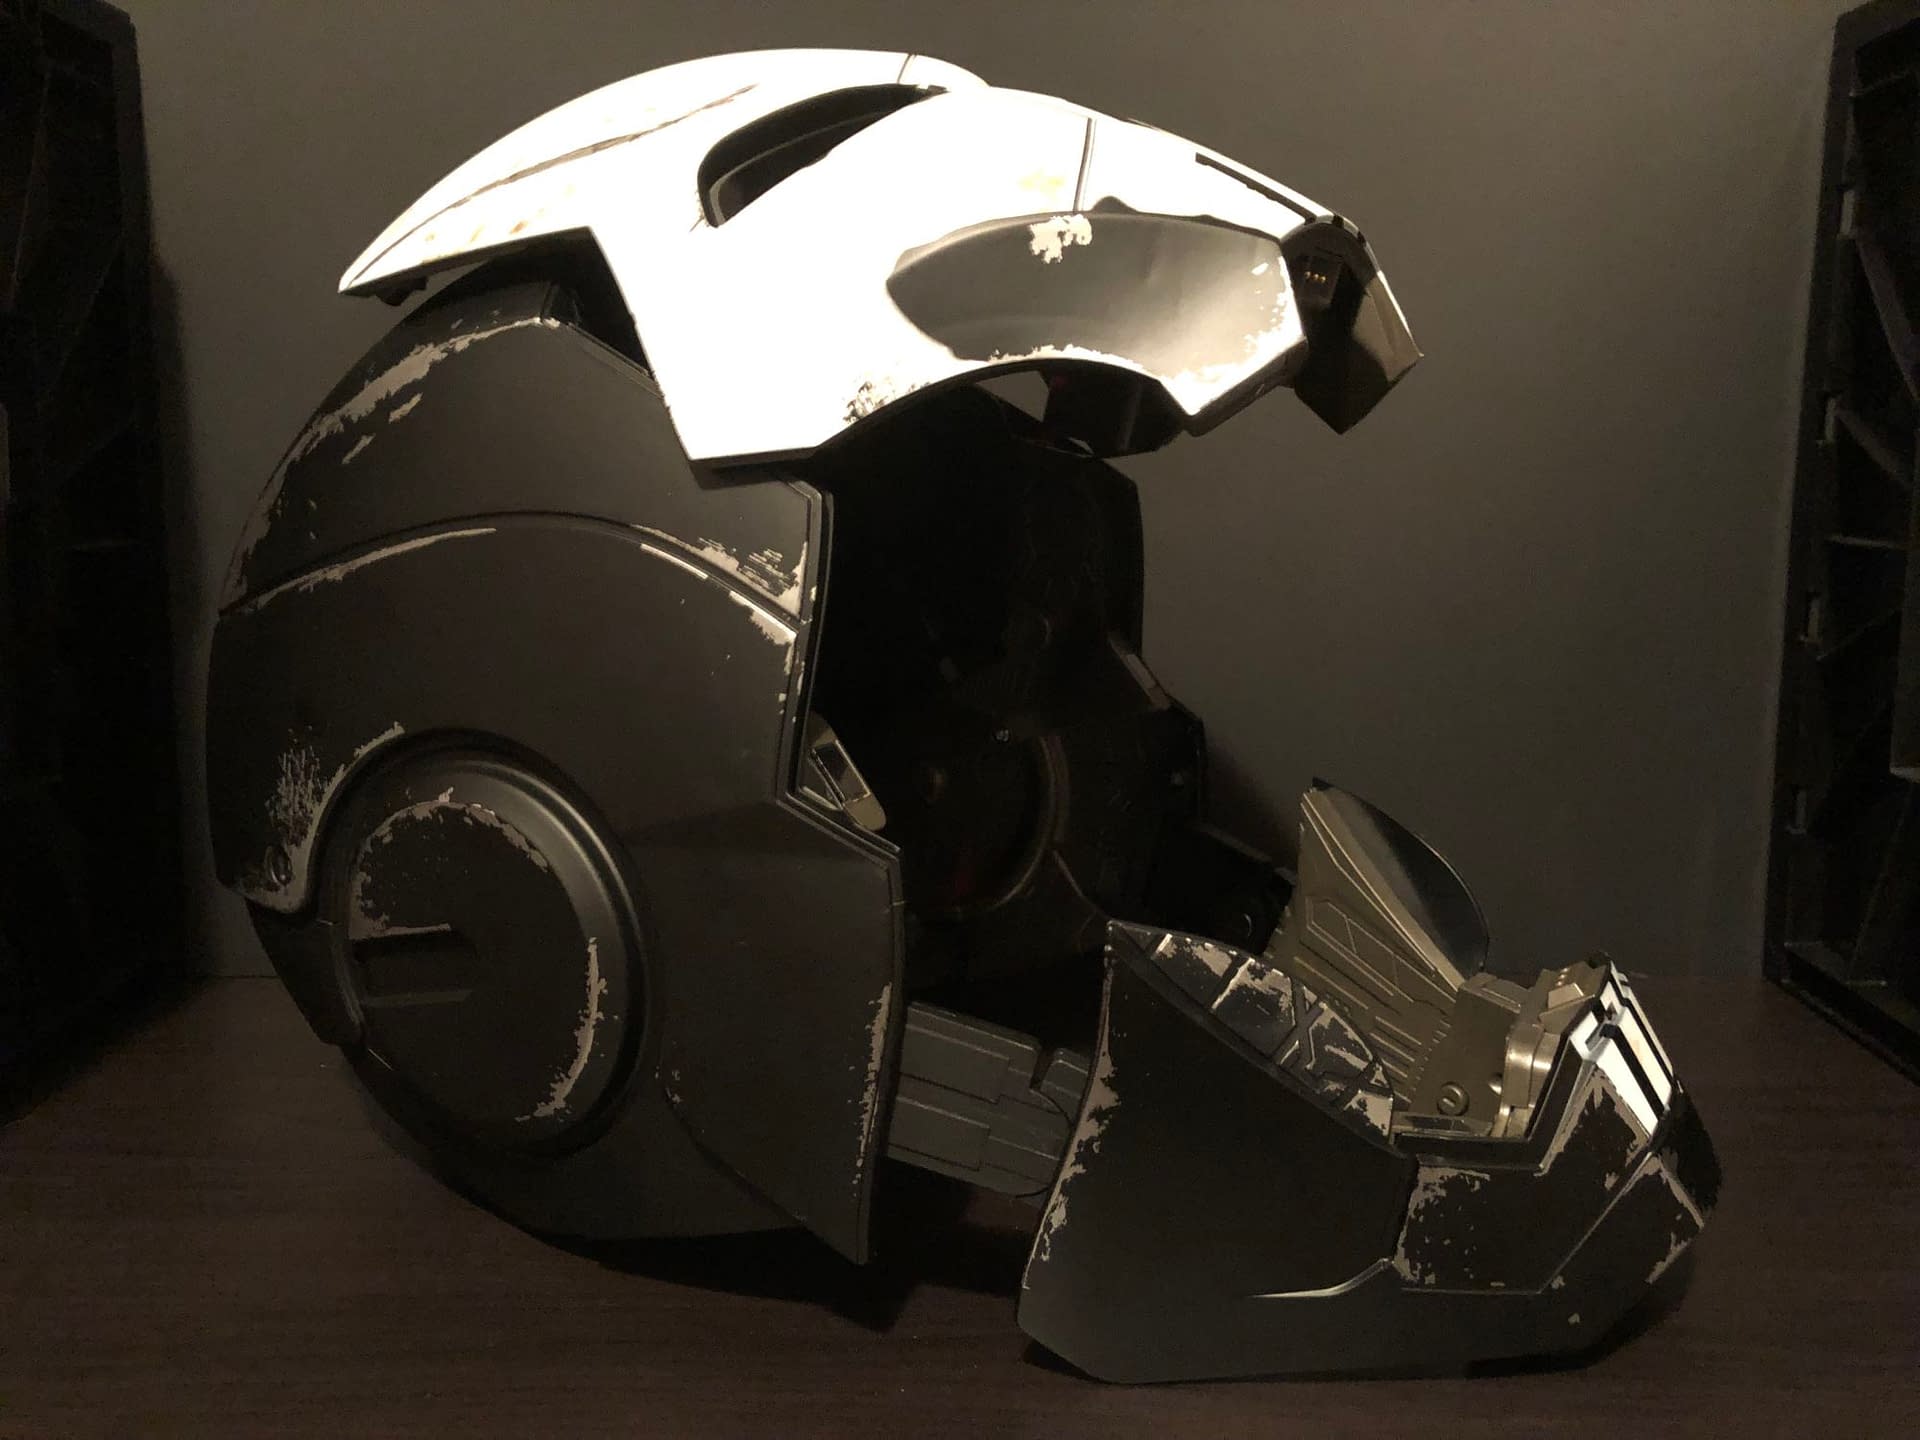 Punisher War Machine Helmet Prepares You for War [Review]